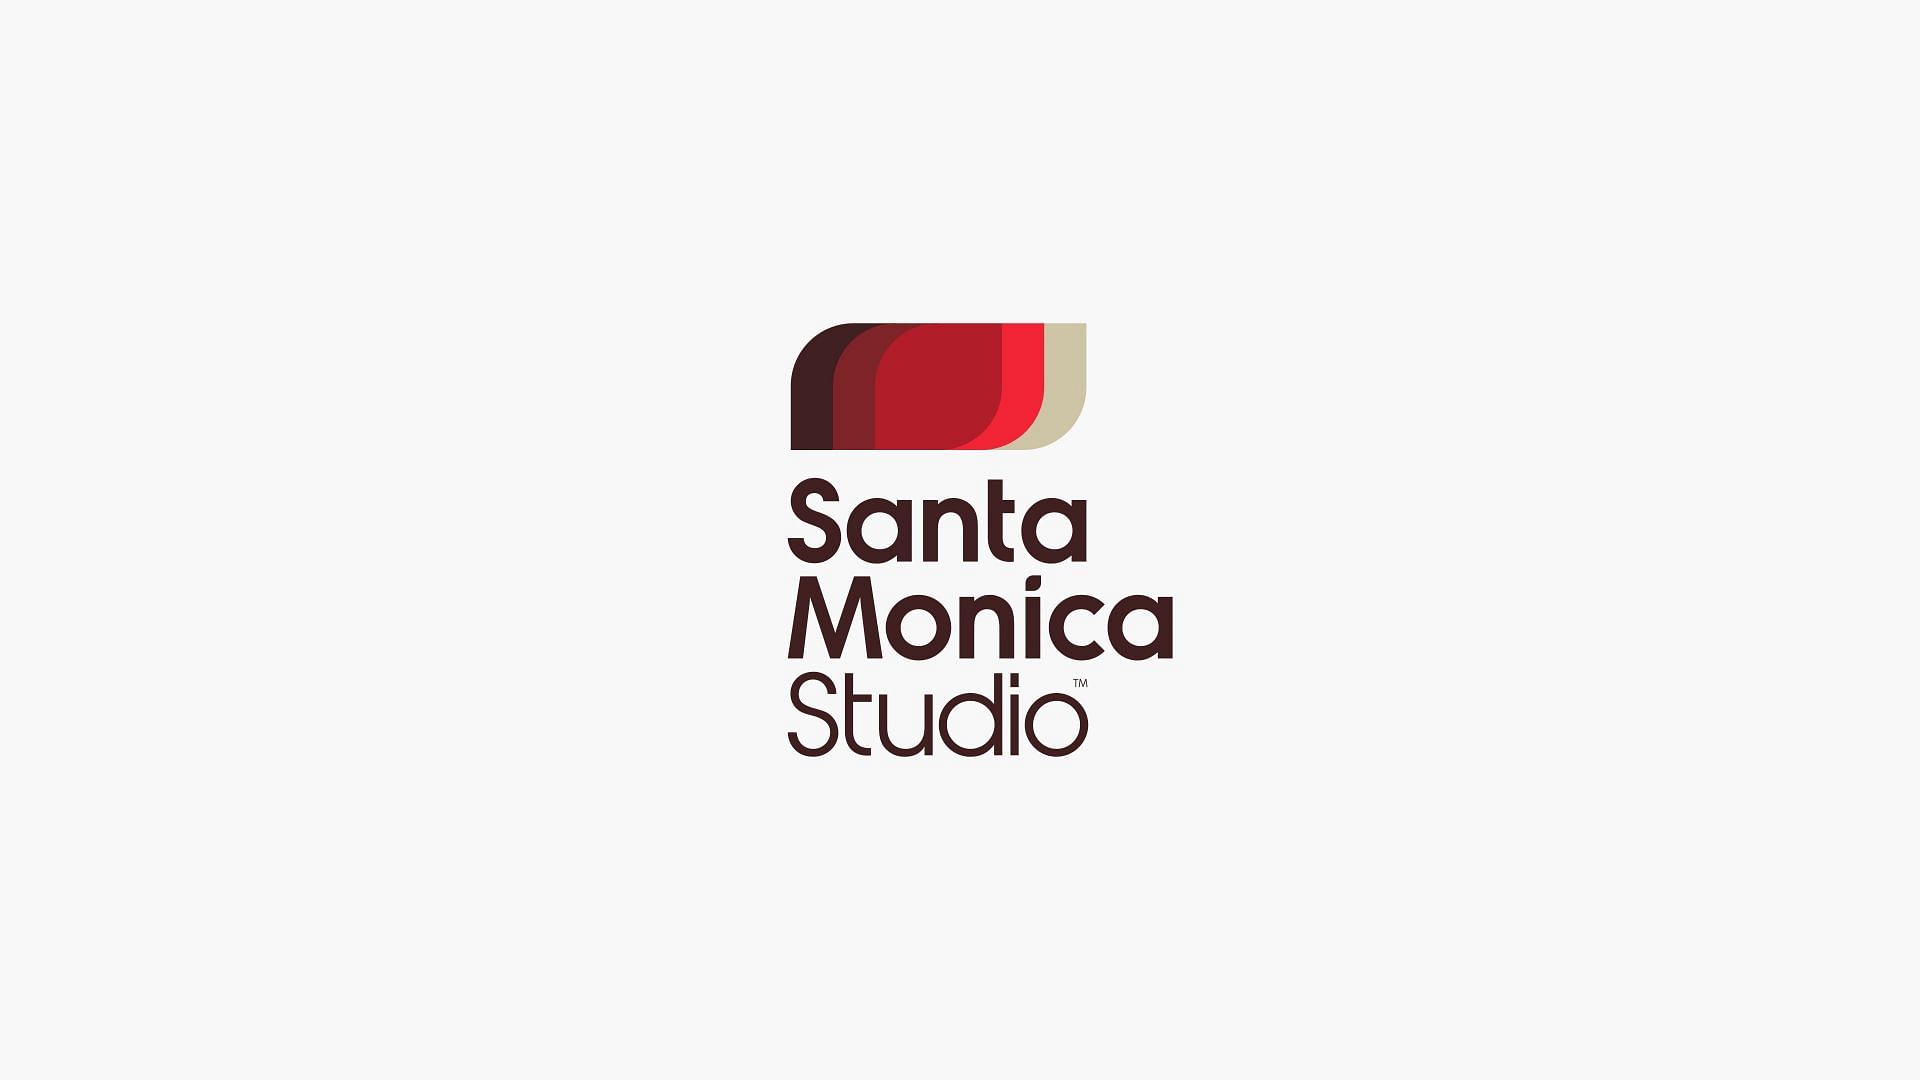 The logo for Santa Monica Studio (Image via Santa Monica Studio)